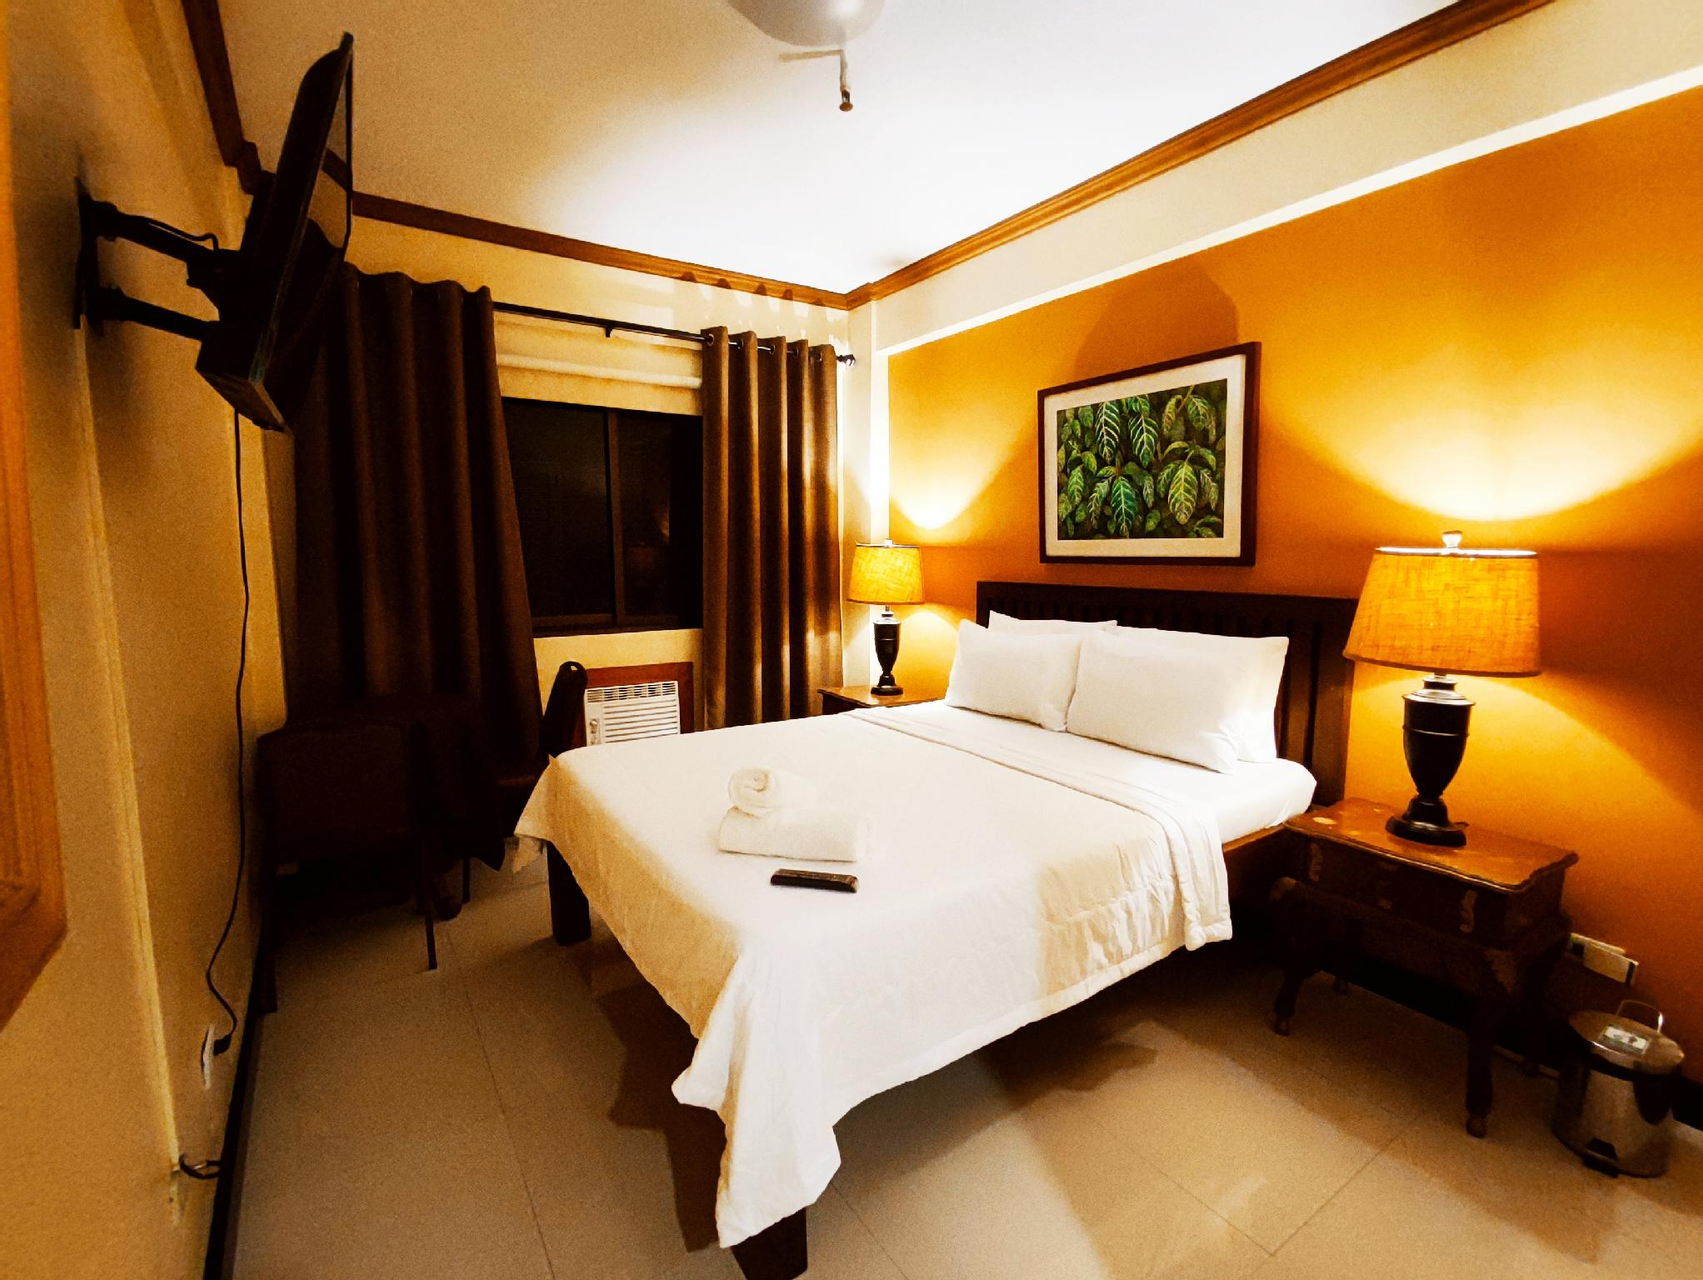 Bedroom 3, Spring Plaza Hotel, Dasmariñas